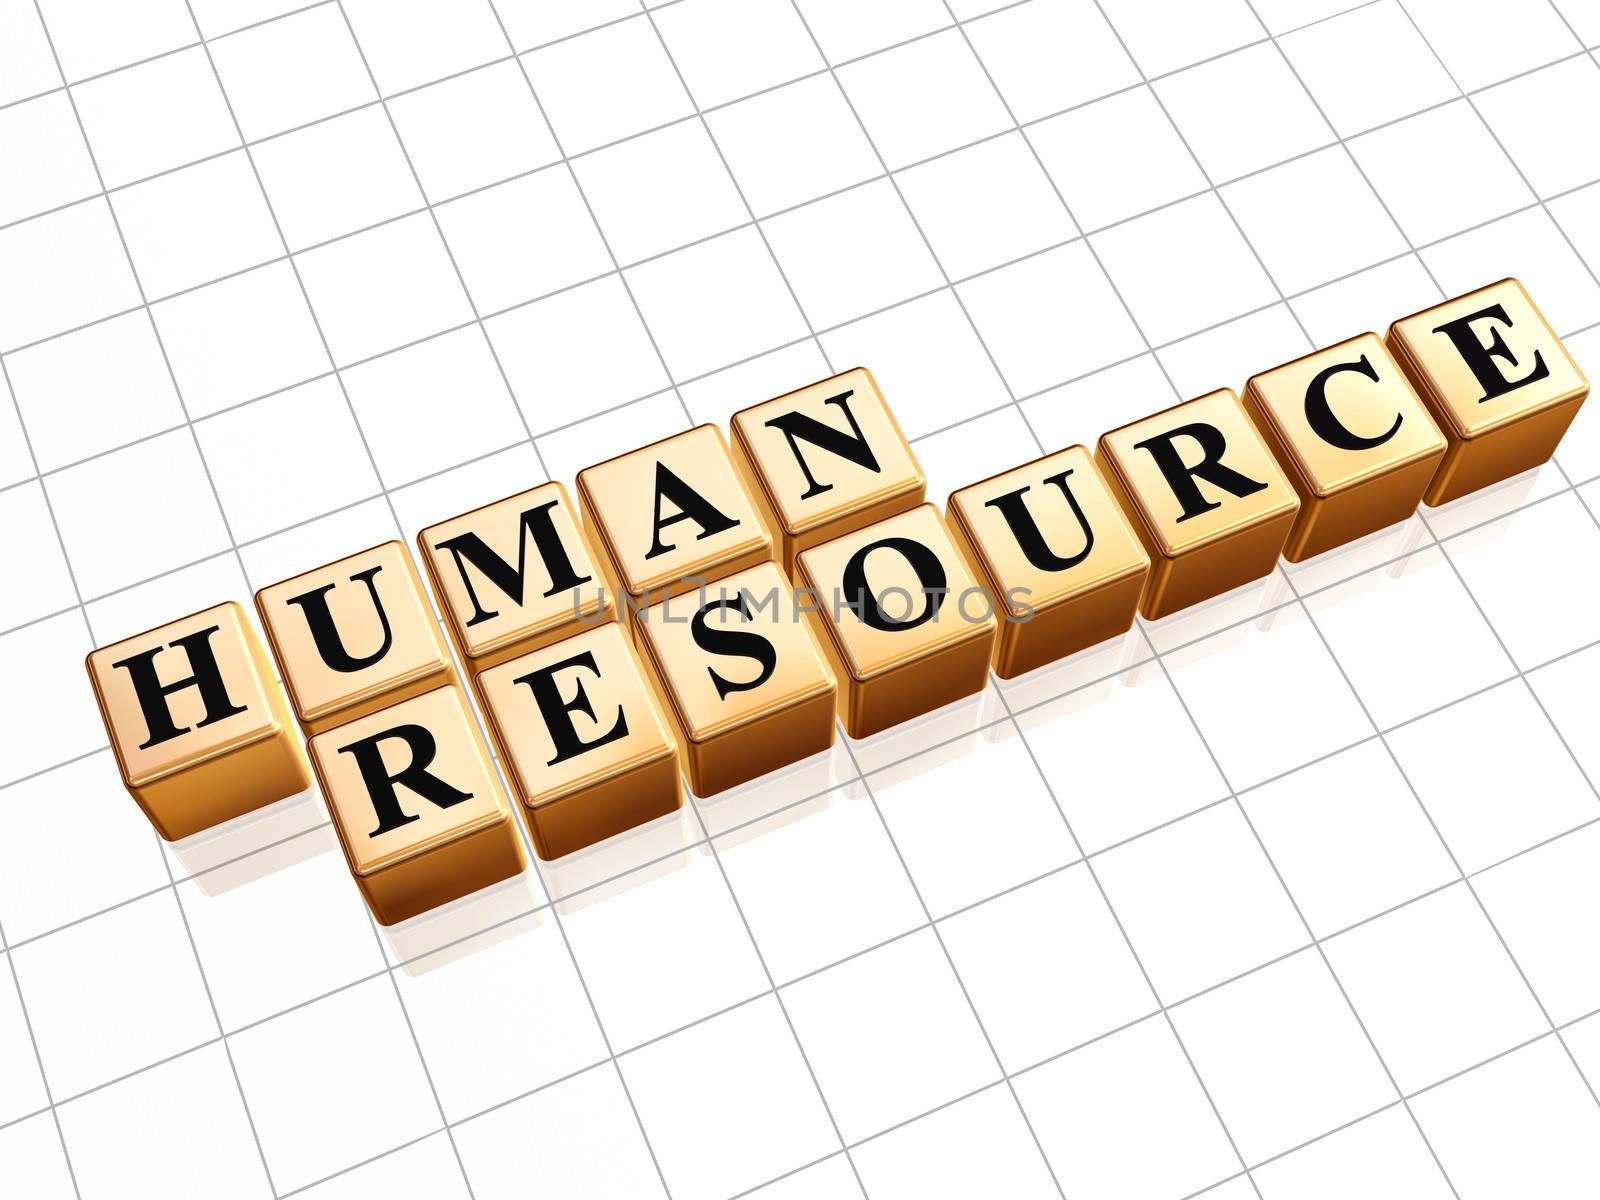 Human resource by marinini